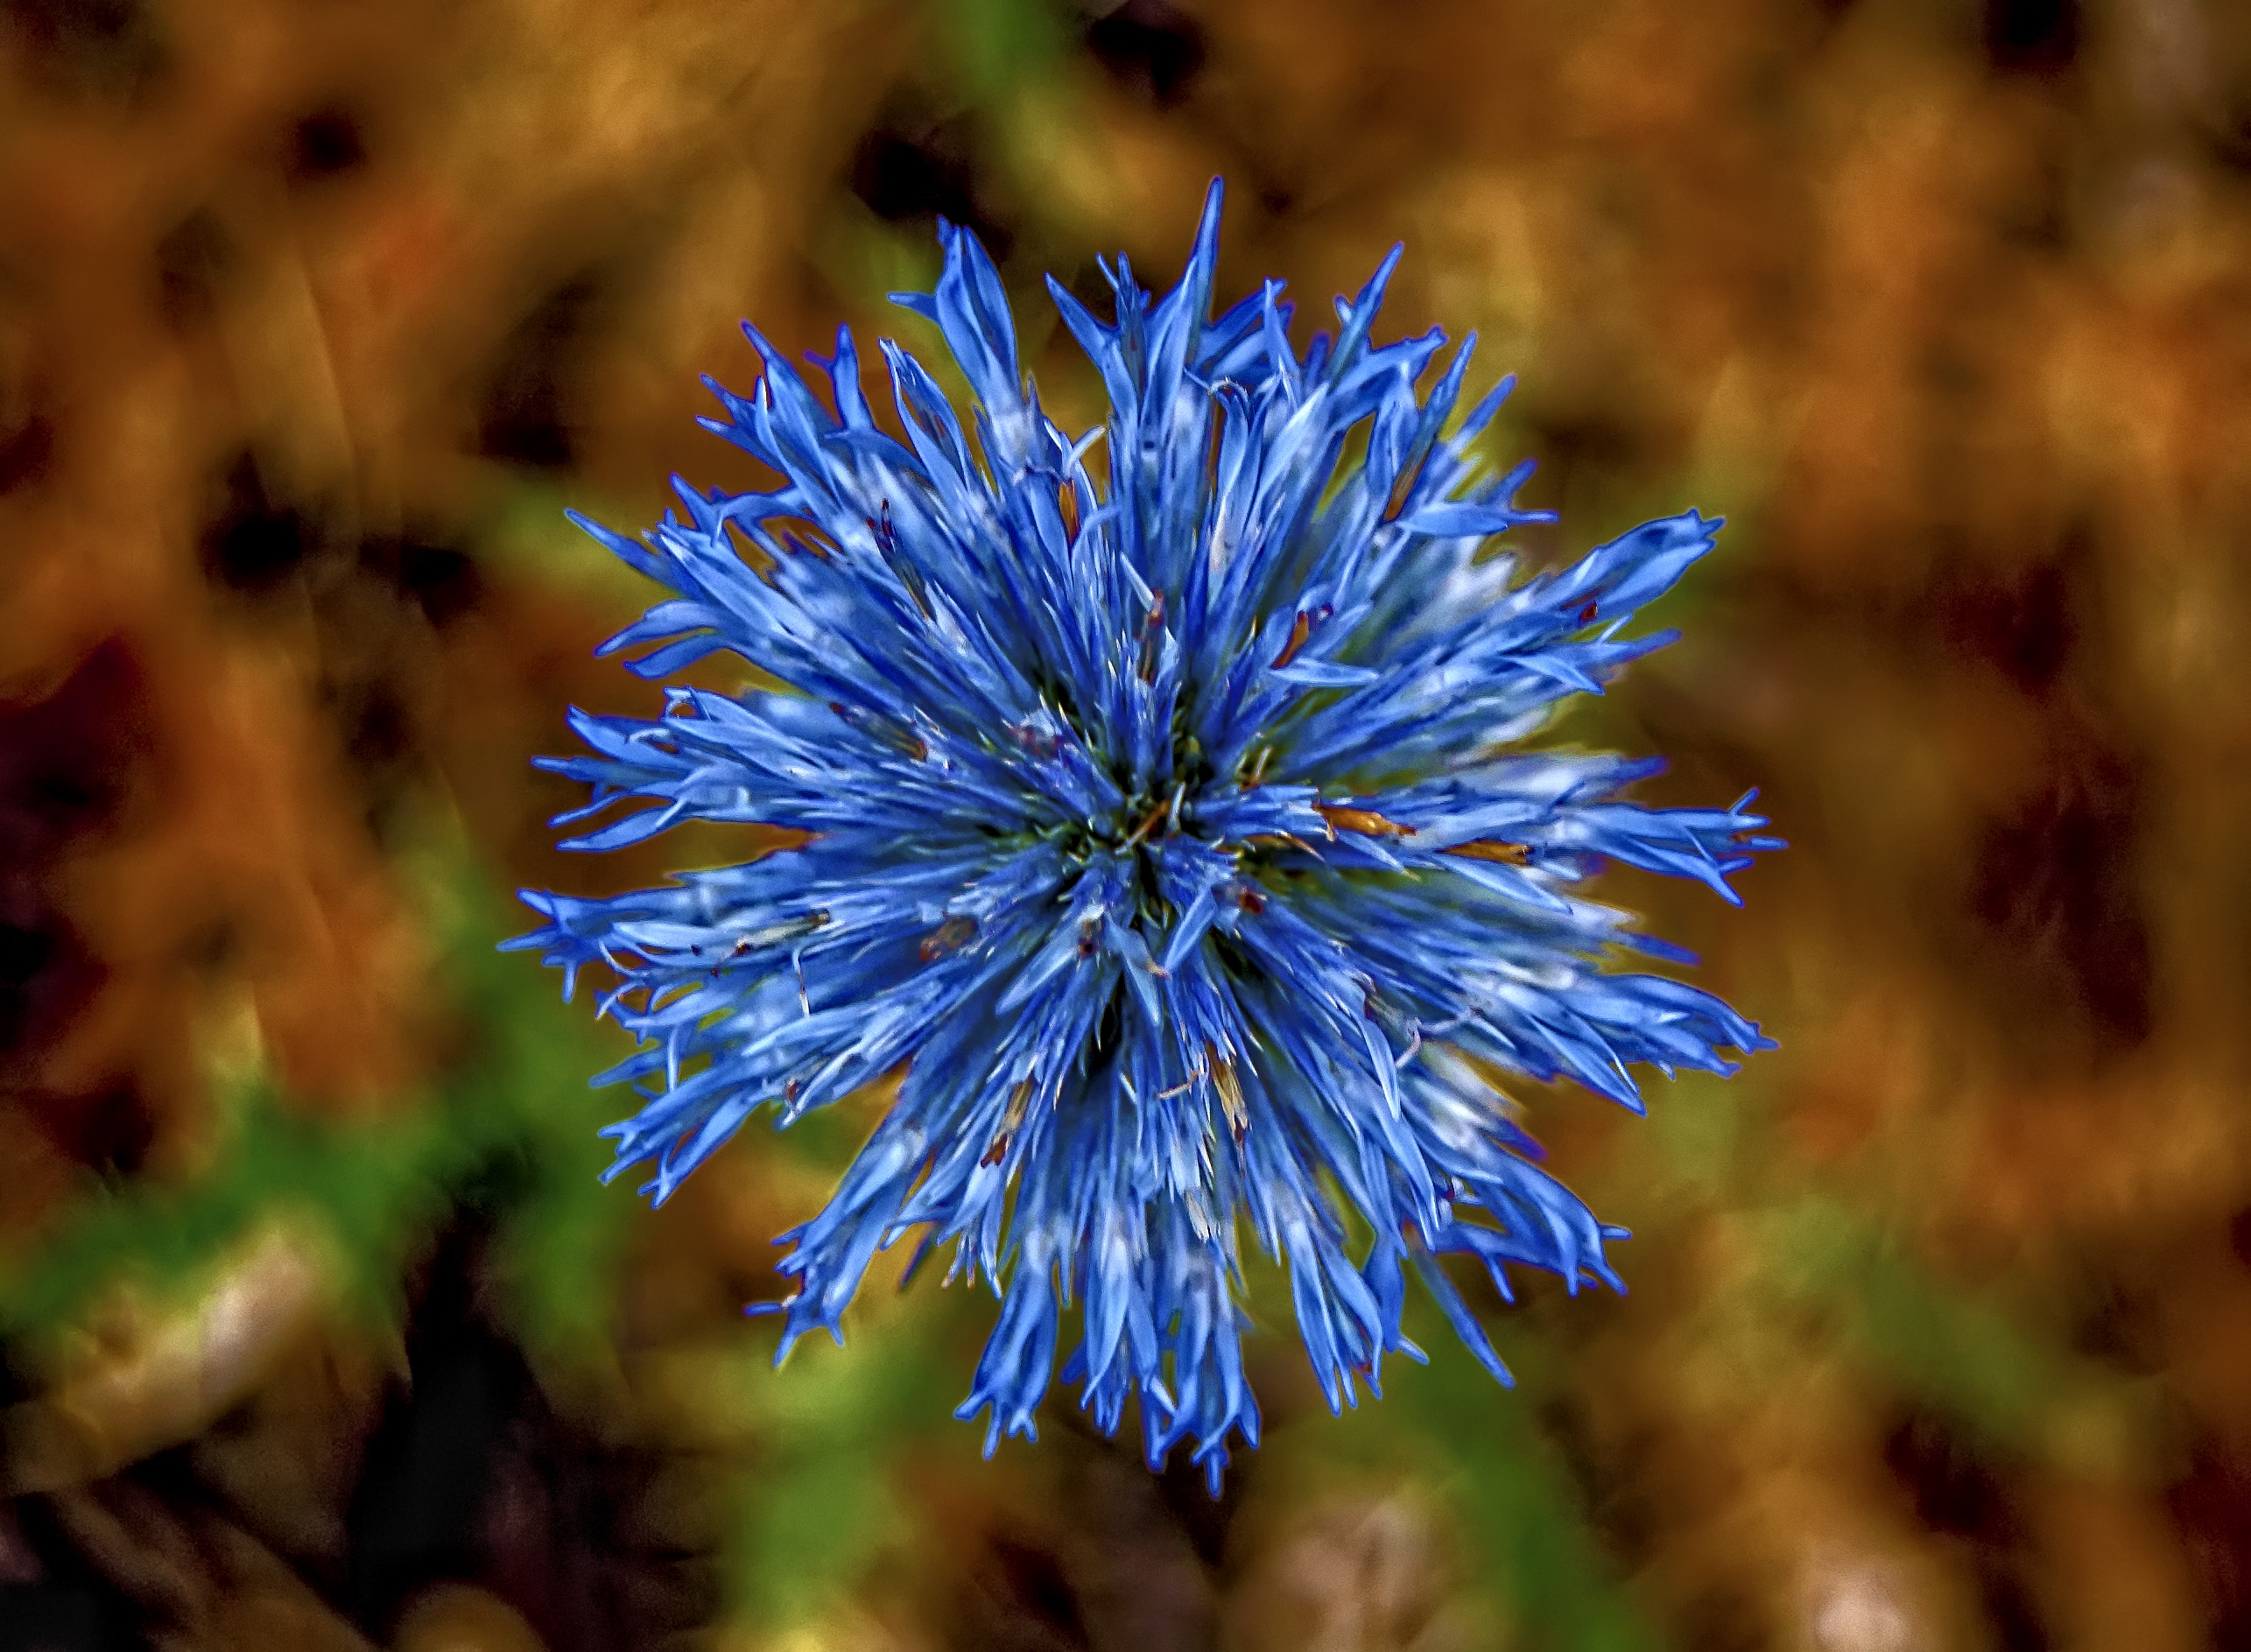 Blue Blooming flower Macro image - Free stock photo - Public Domain ...